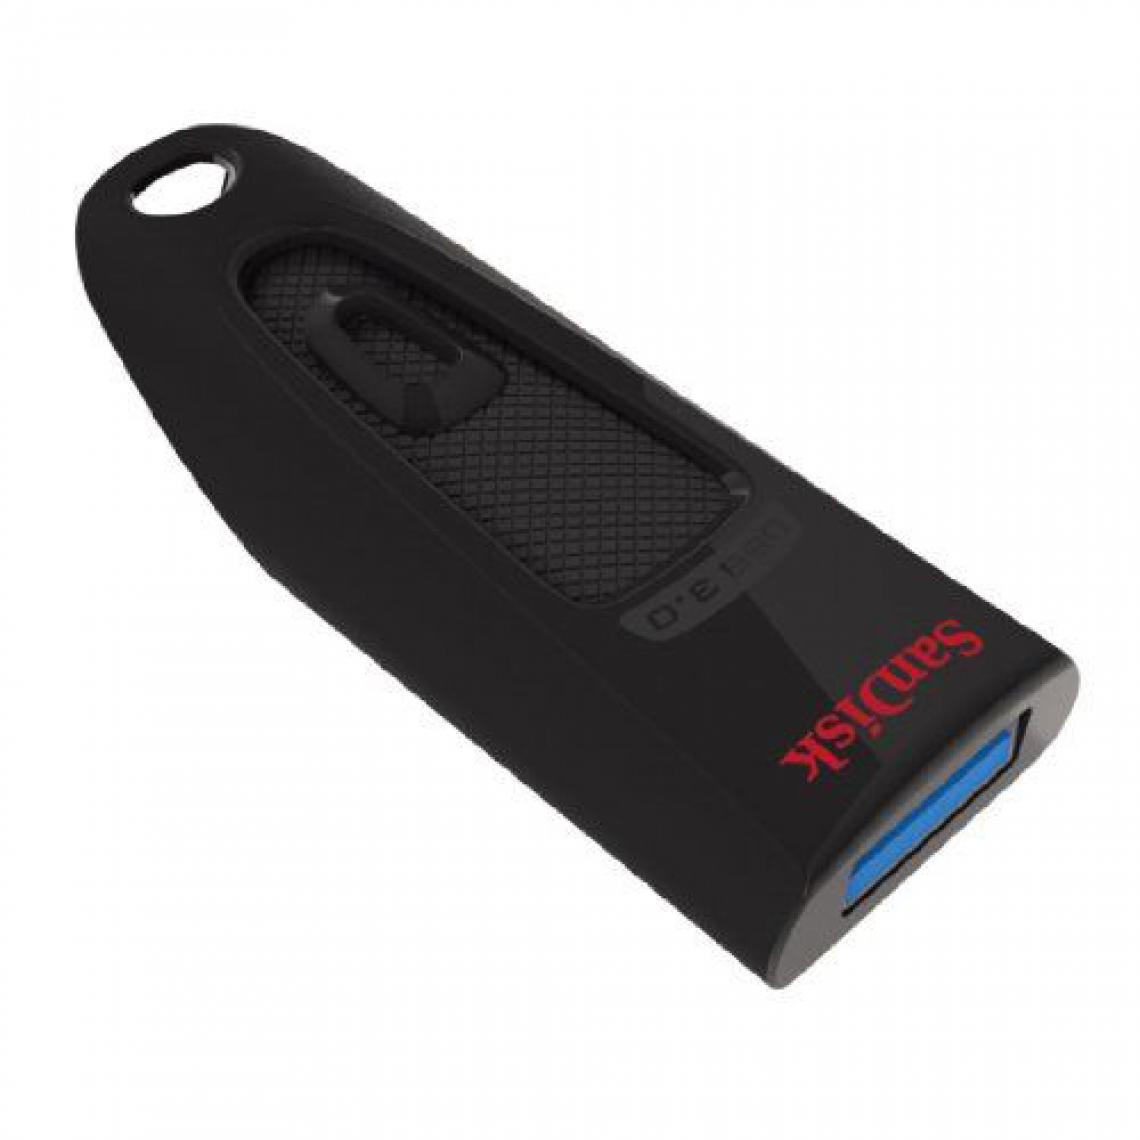 Mgm - SanDisk SDCZ48-016G-U46 Ultra clé USB 3.0 16 Go - Clés USB